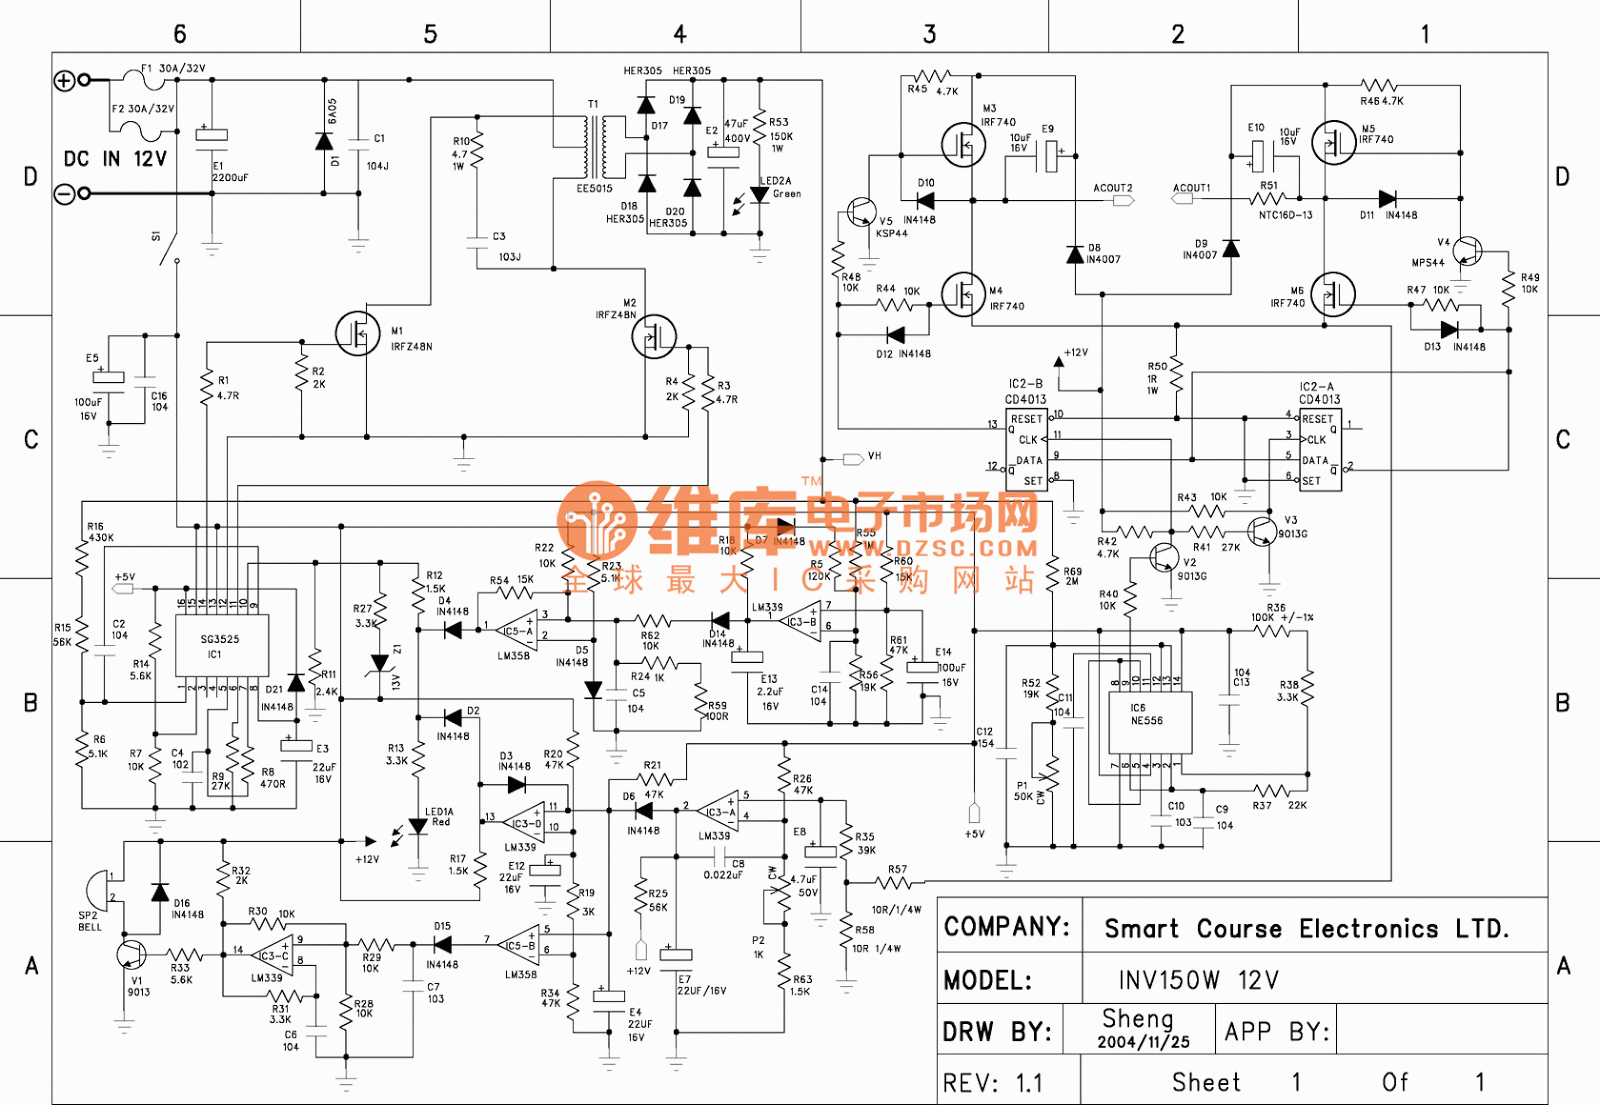 Schematics diagrams: DC AC inverter 150W 12V to 220V ...